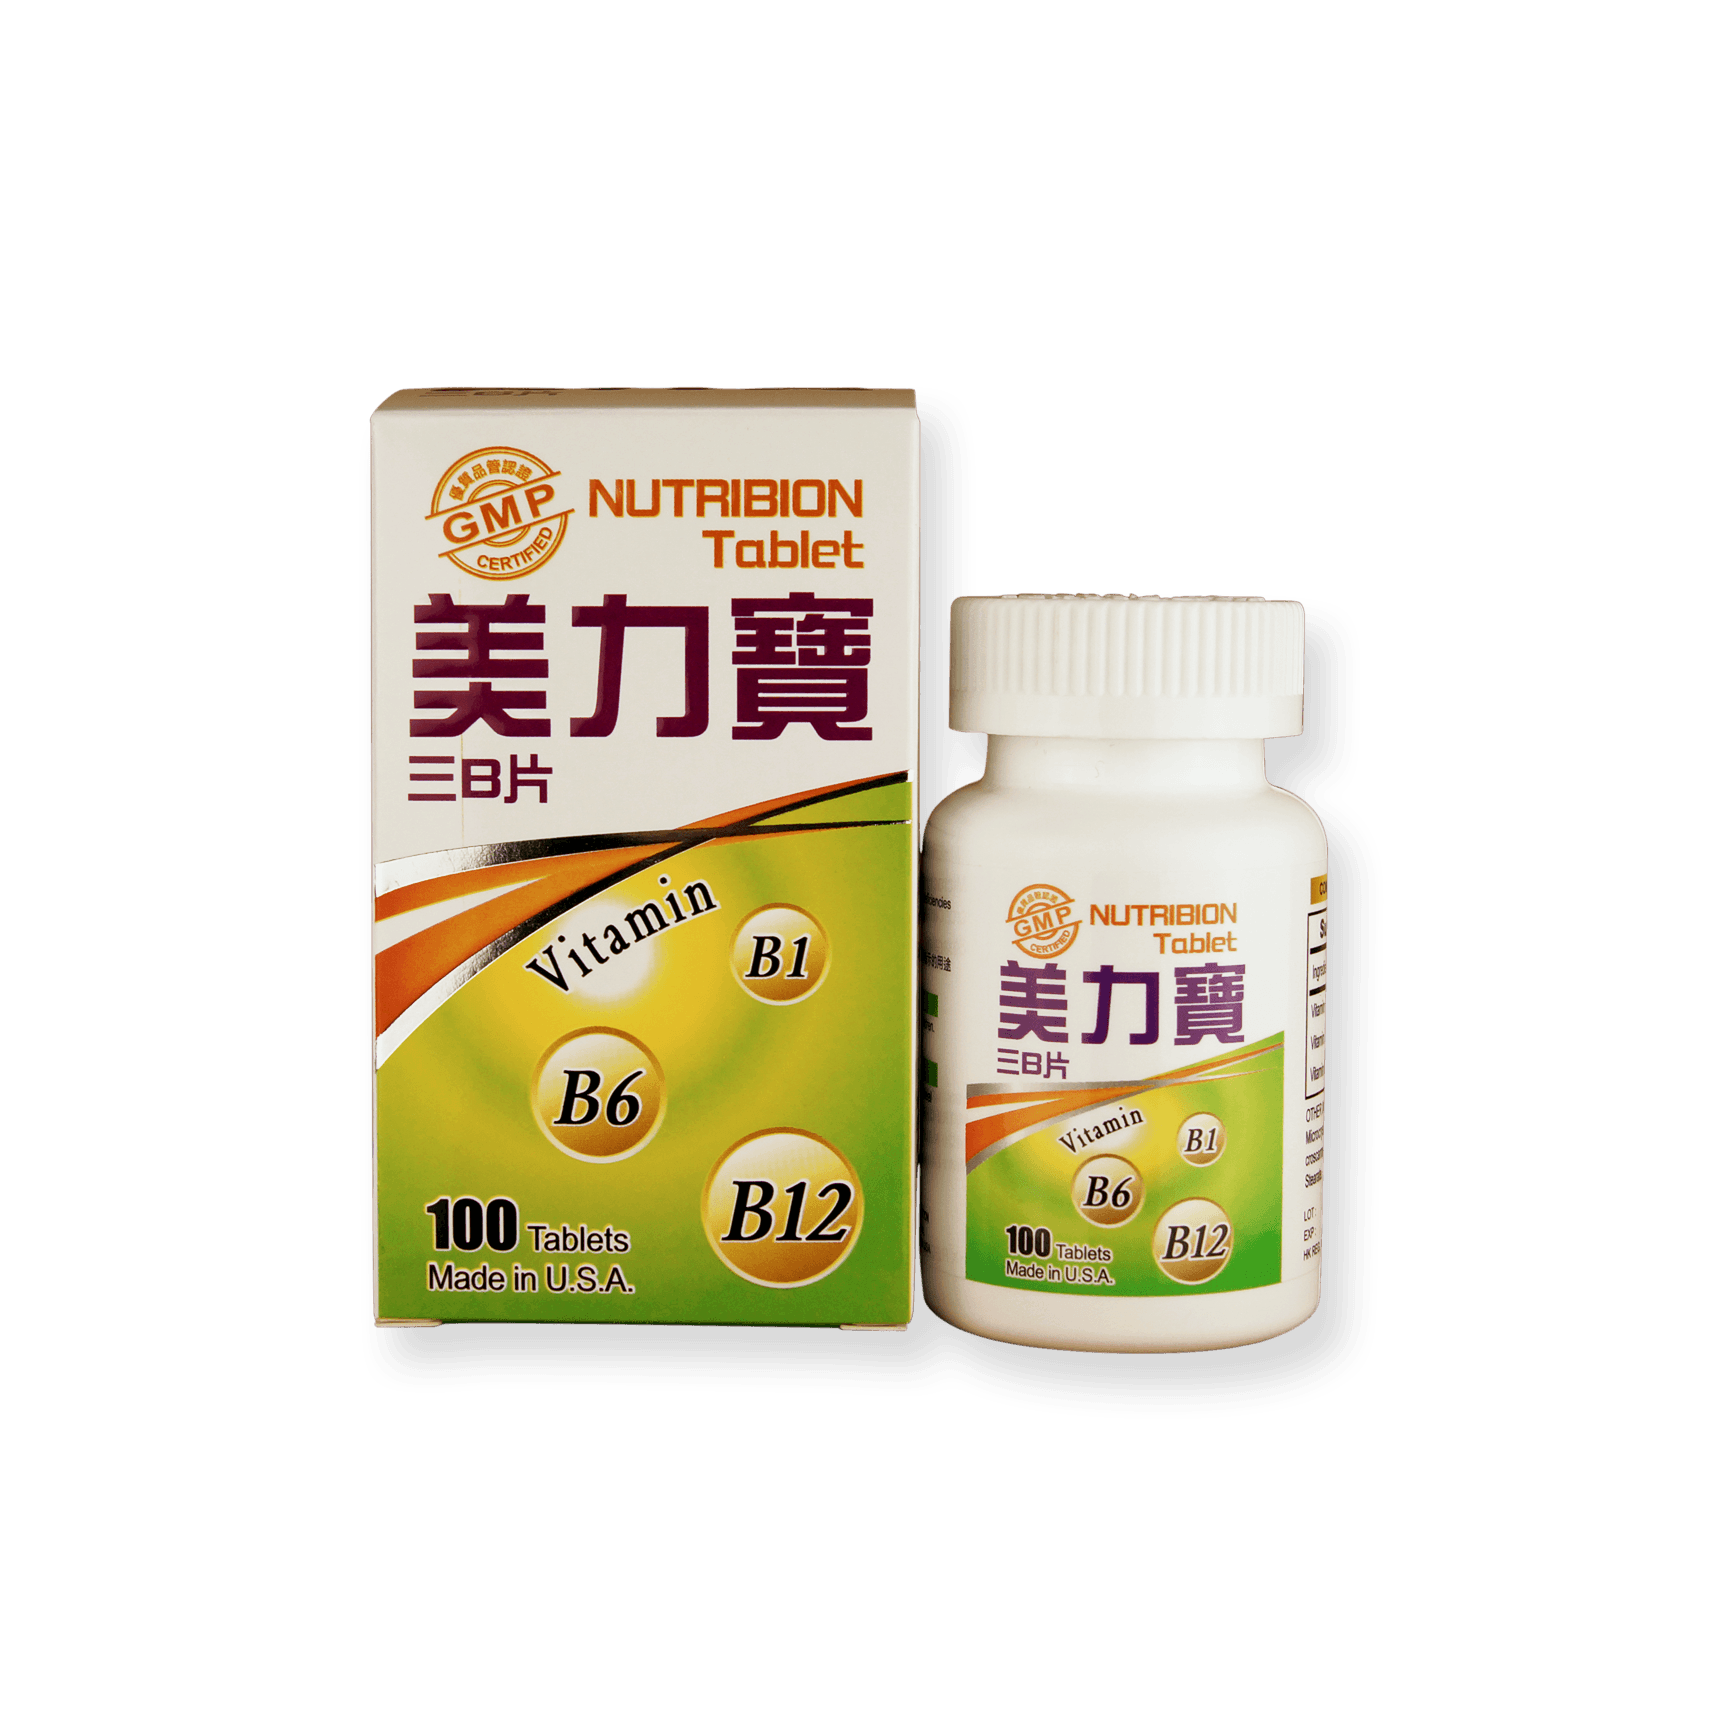 美力寶三B片 100's NUTRIBION TABLET 100's (Vitamin B1+B6+B12)